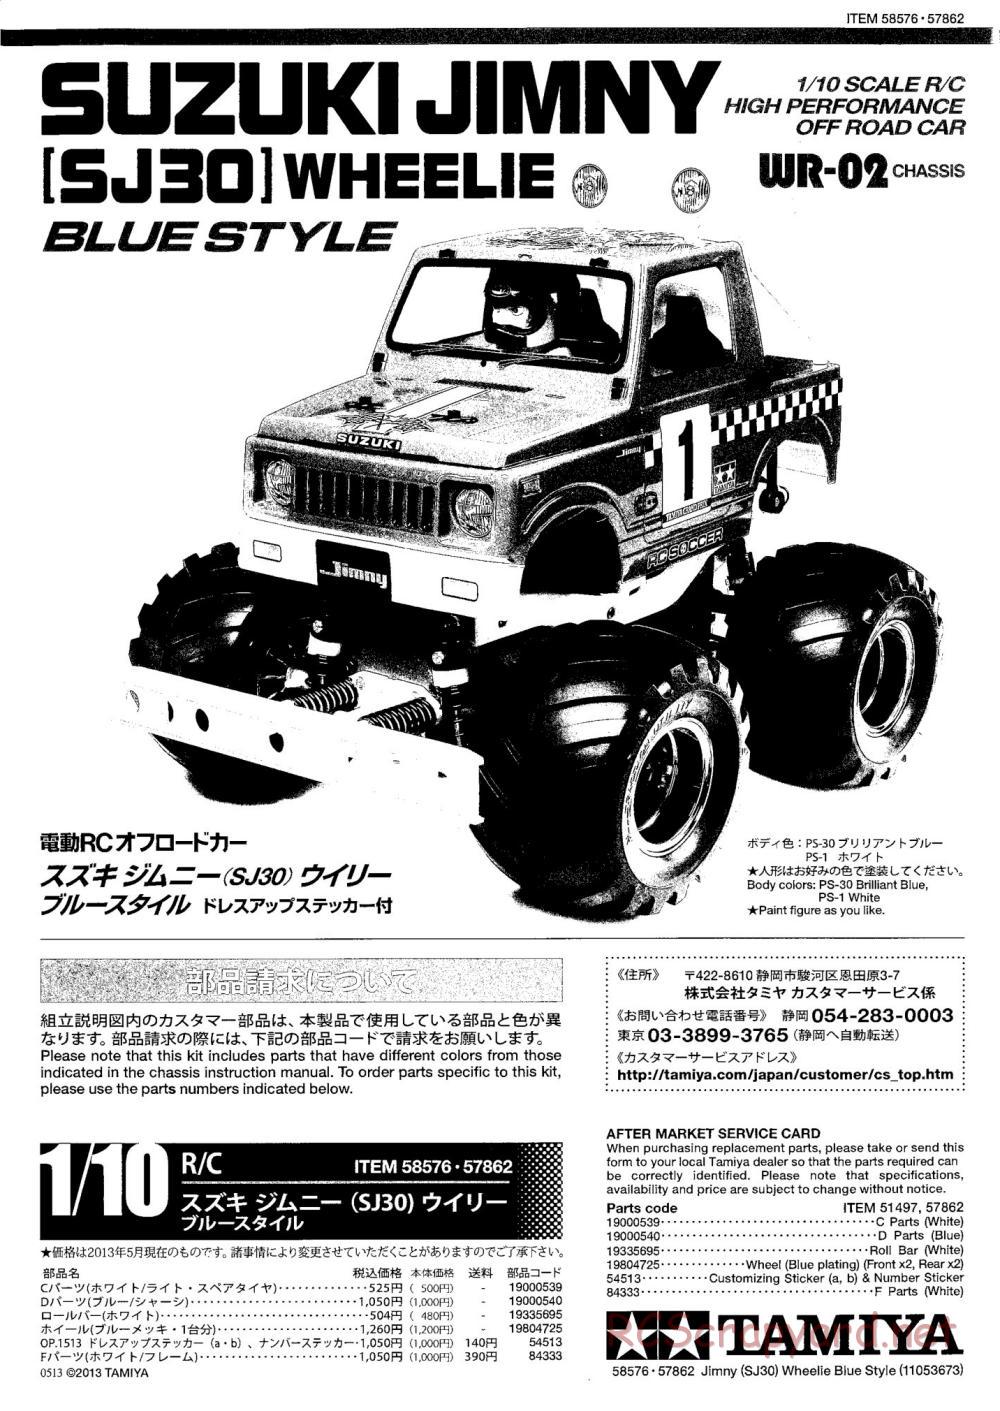 Tamiya - Suzuki Jimny (SJ30) Wheelie - WR-02 Chassis - Manual - Page 21